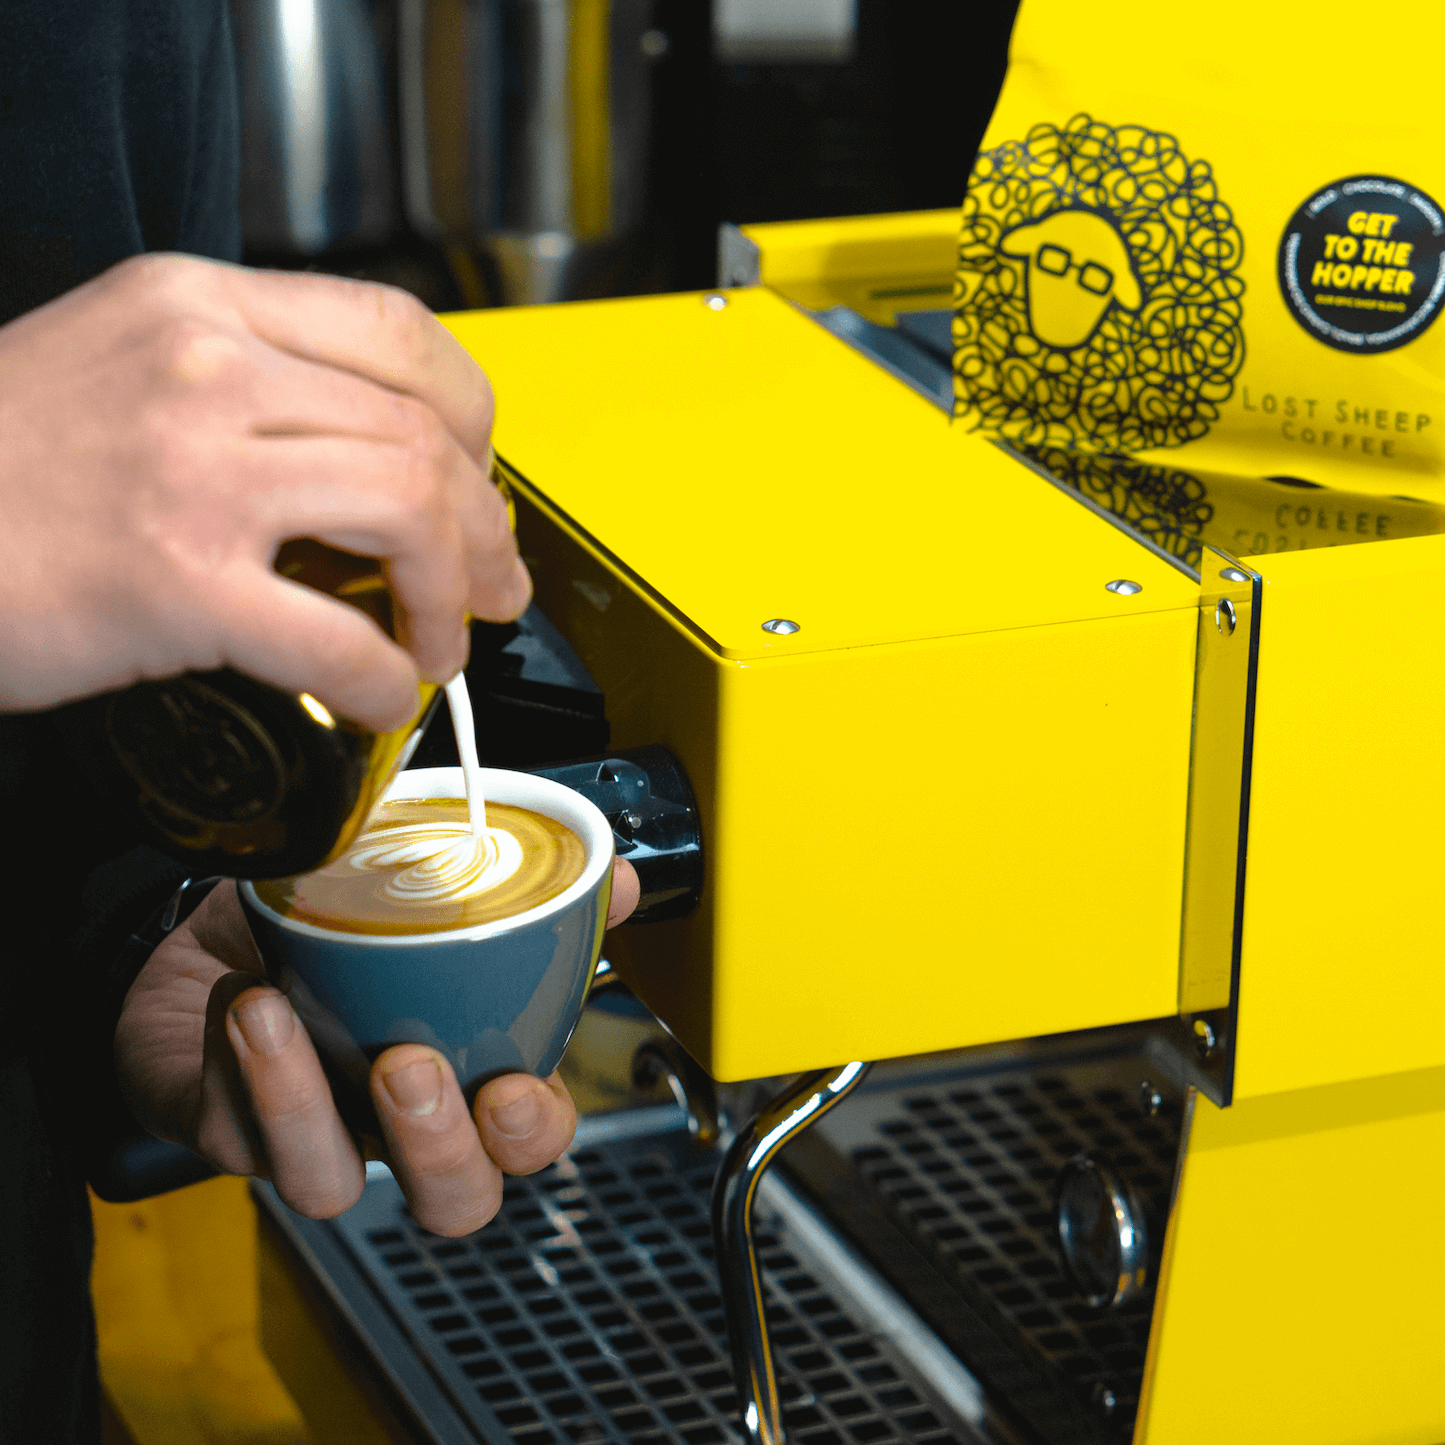 Making flat white coffee using Lost Sheep Coffee on yellow espresso machine